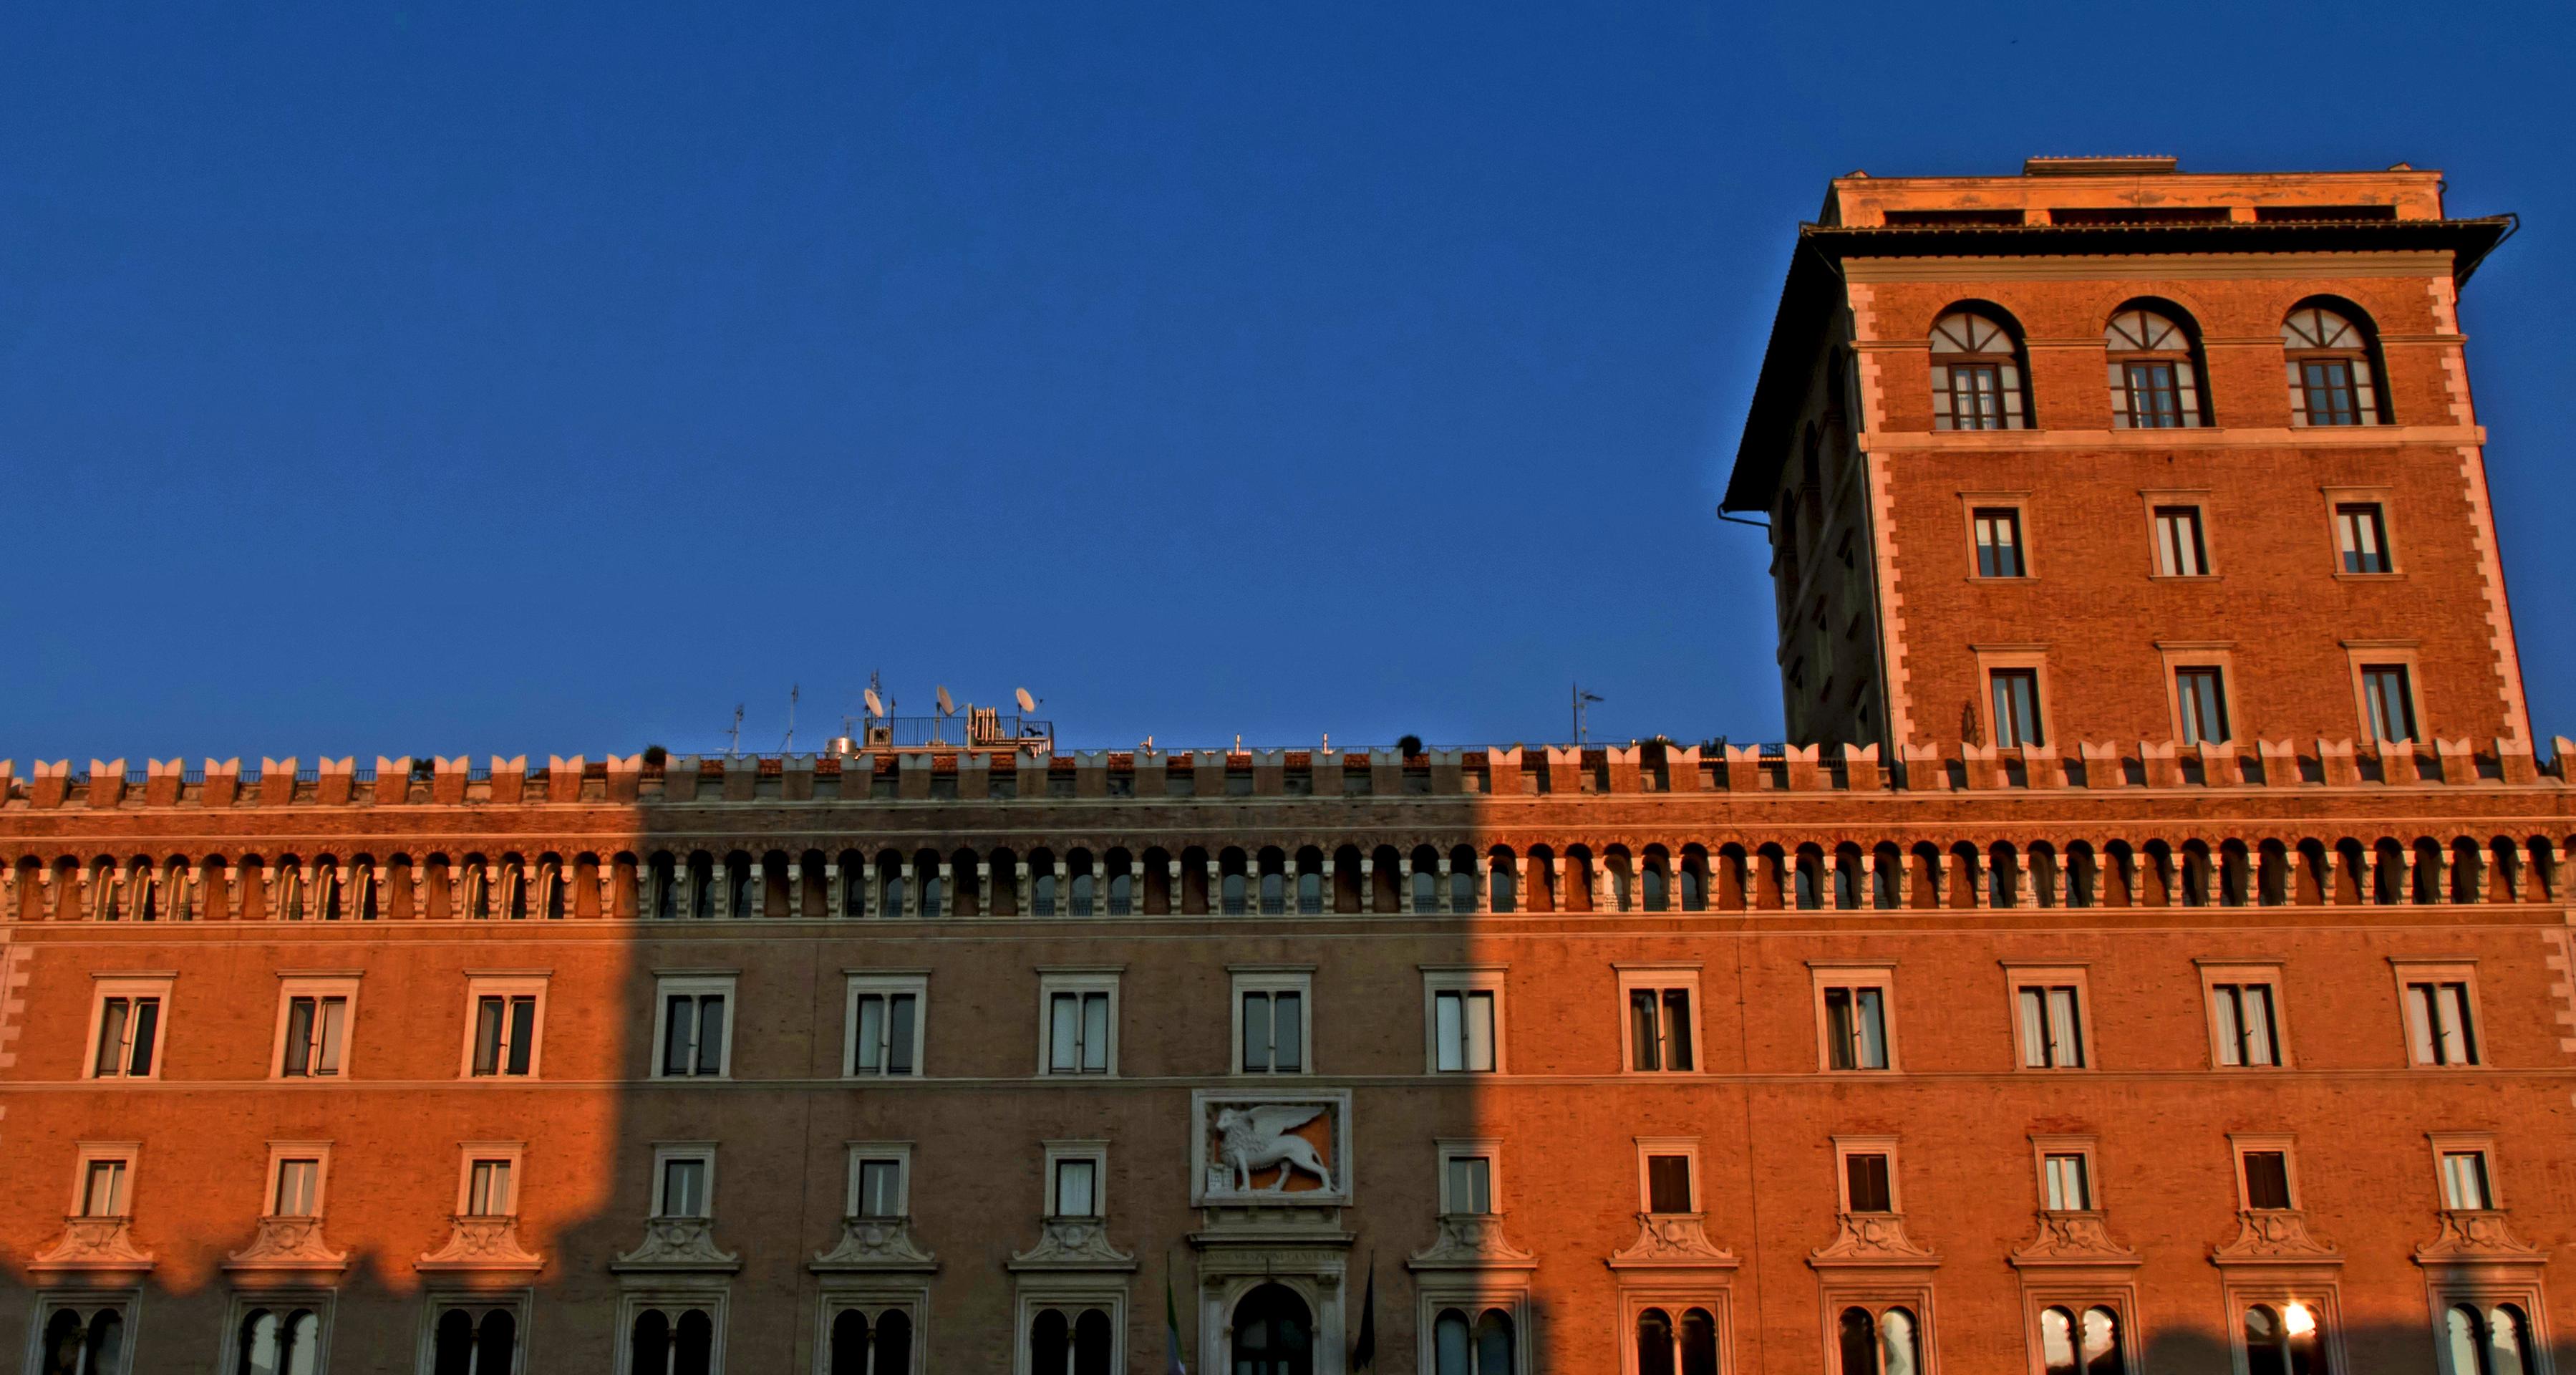 Ingresso Museu do Palácio Venezia - Acesso corta-fila